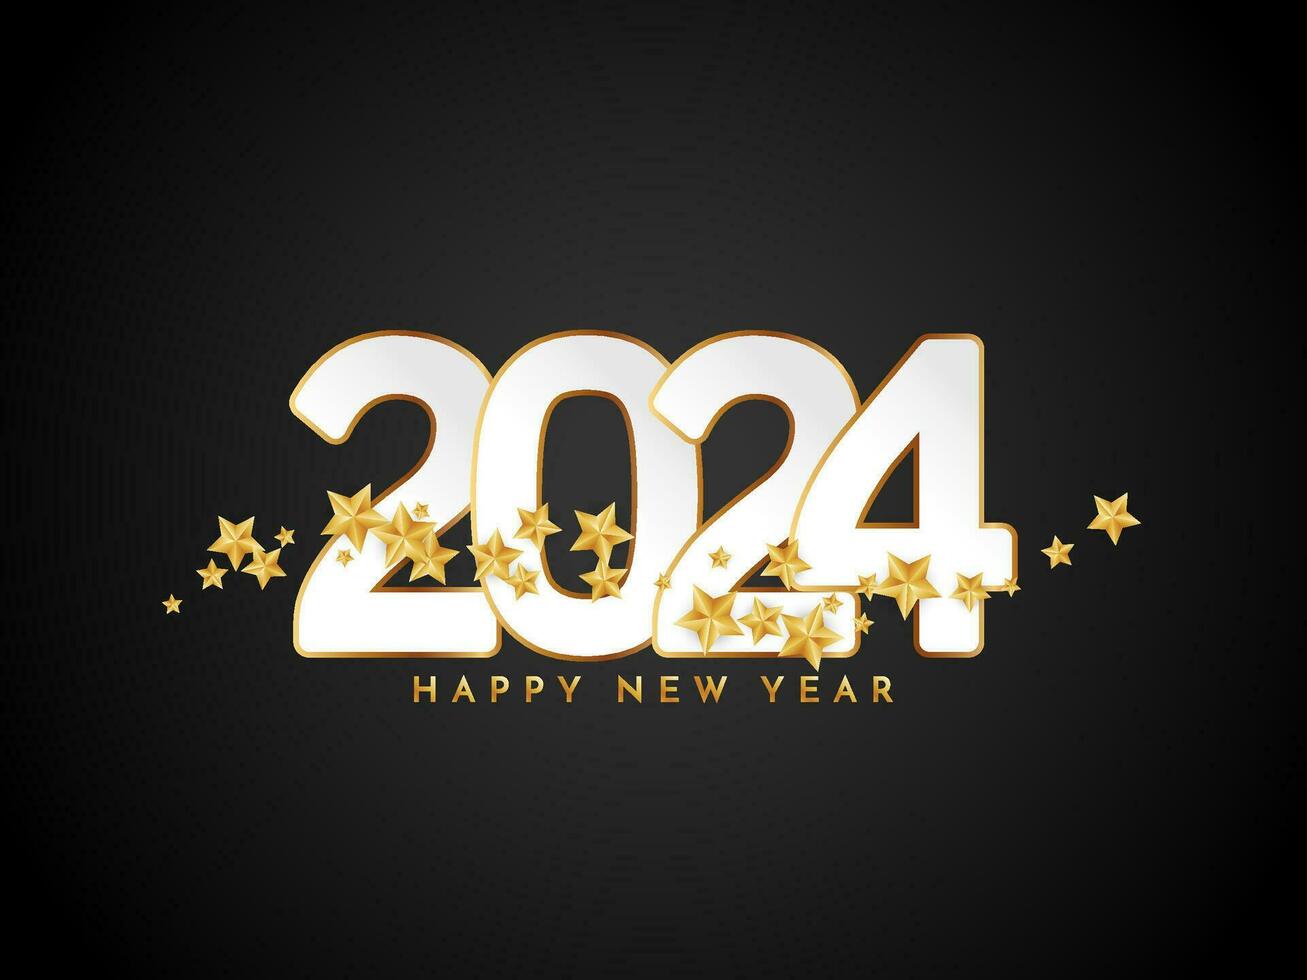 Happy new year 2024 celebration wishes elegant background vector